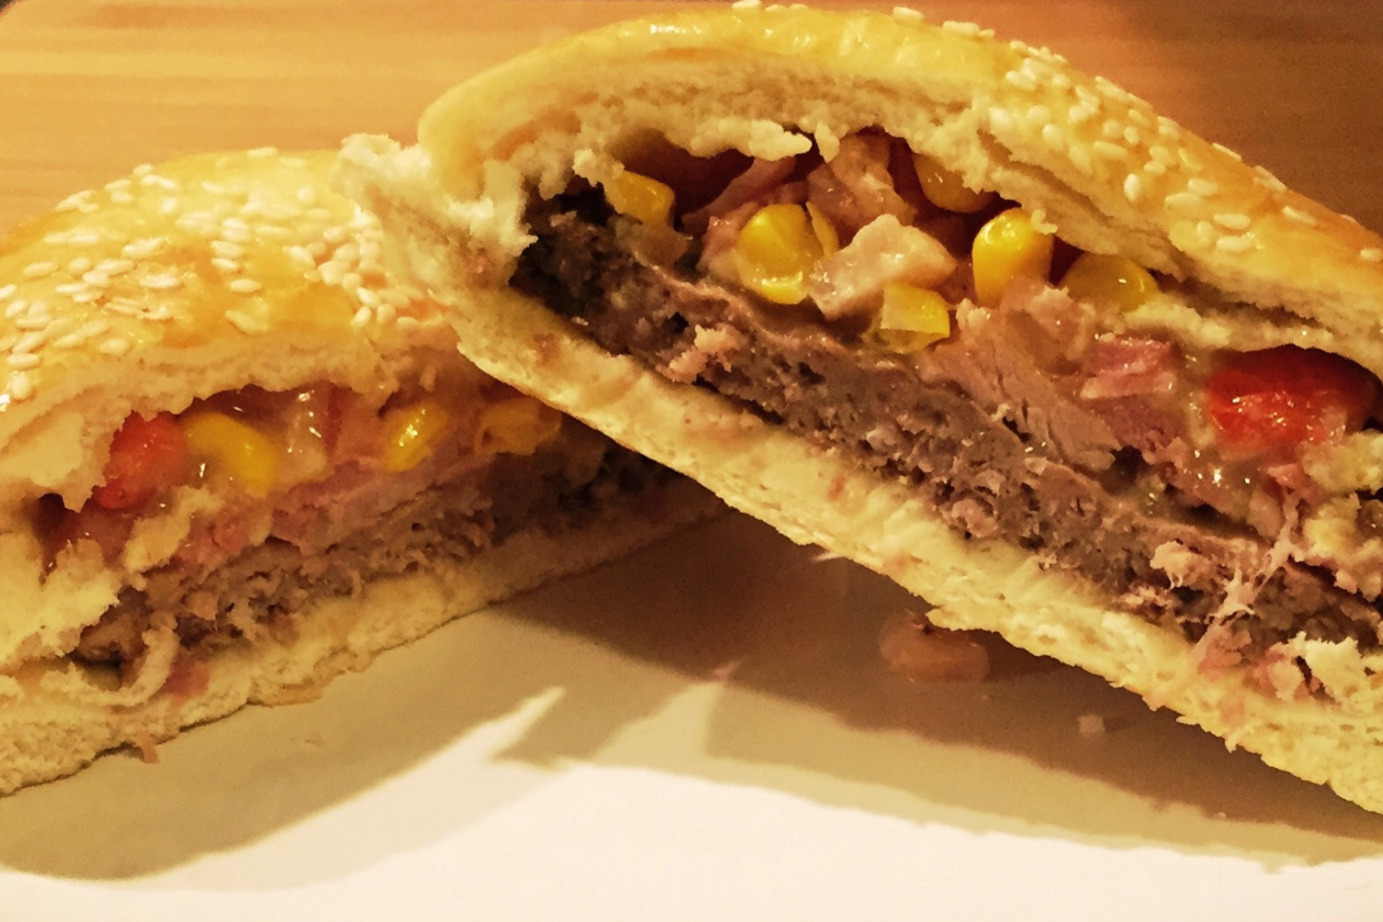  Hamburgao - Burger Empanada with Ham, Cheese, Tomato And Sweetcorn 